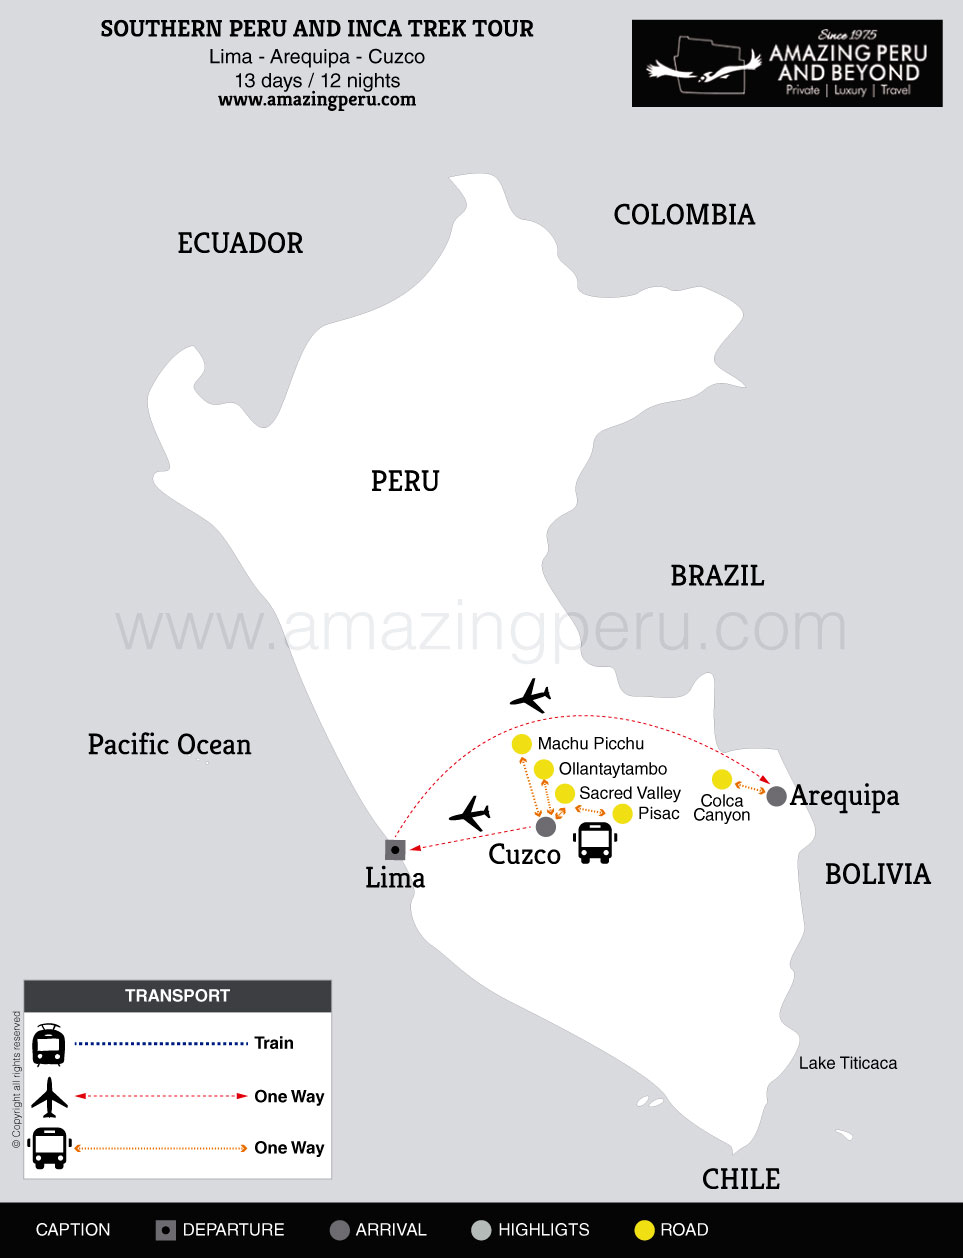 2023 Southern Peru and Inca Trek Tour - 13 days / 12 nights.